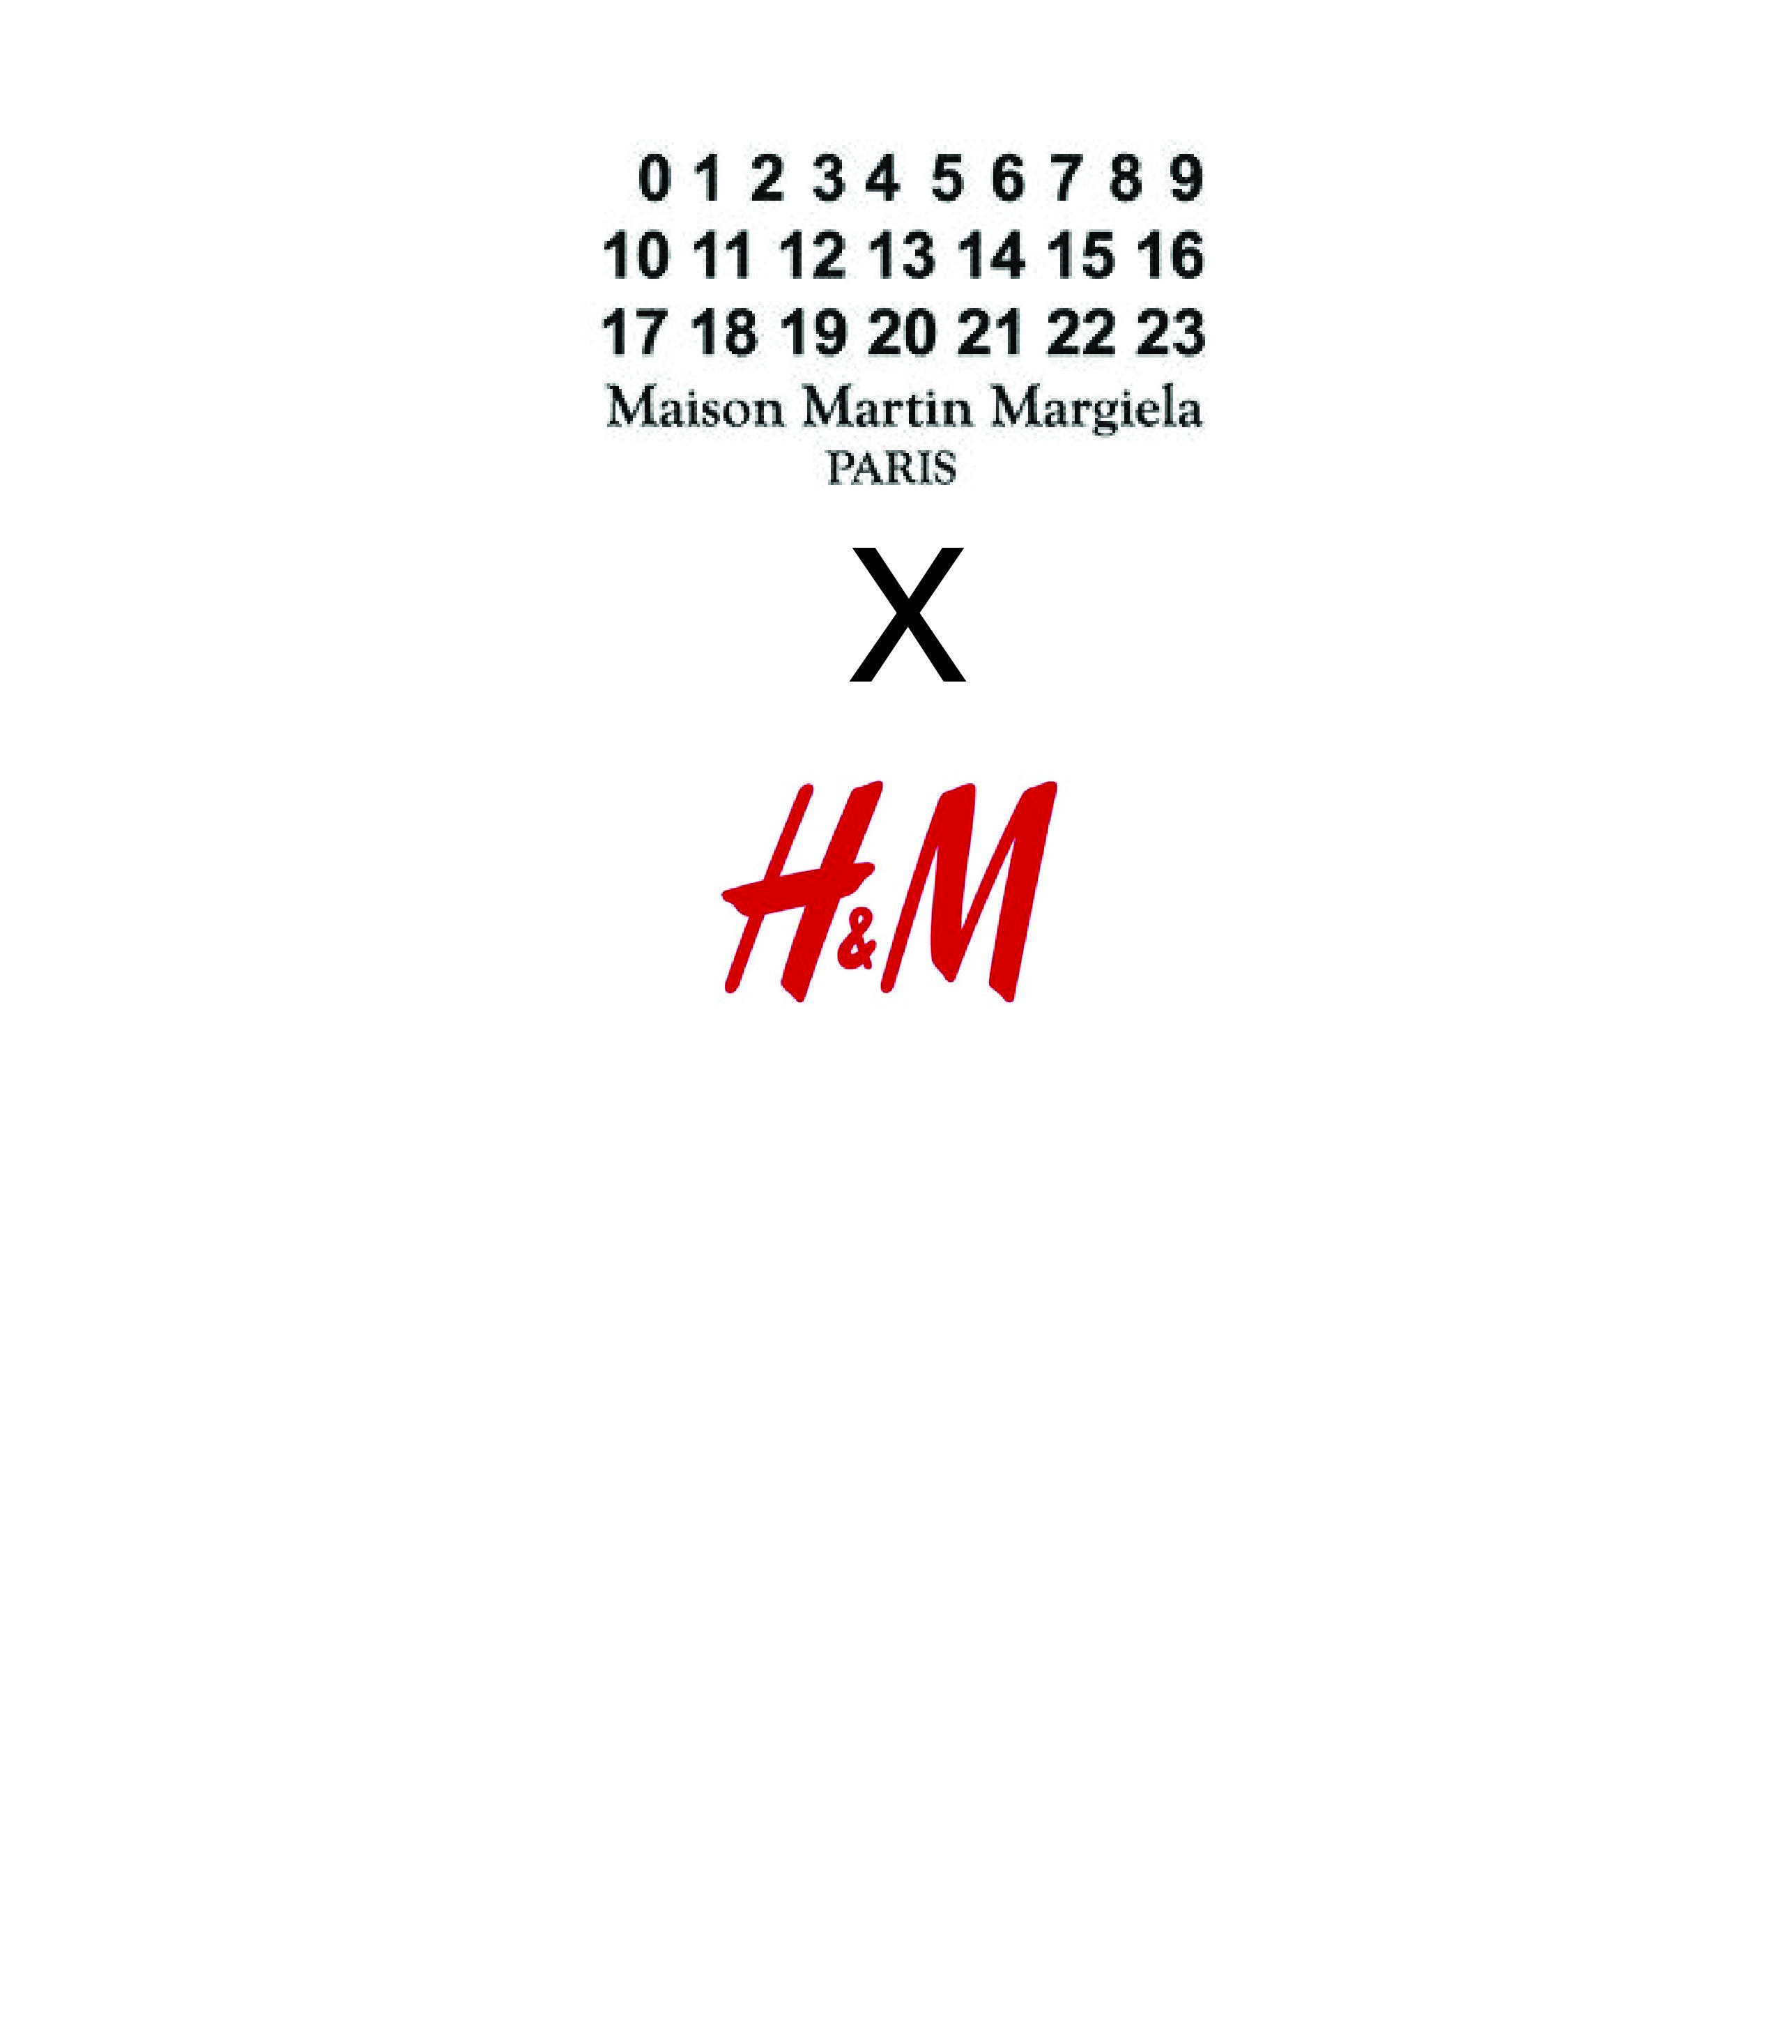 Maison Martin Margiela Logo - H&M X Maison Martin Margiela | Fashionartisan's Blog